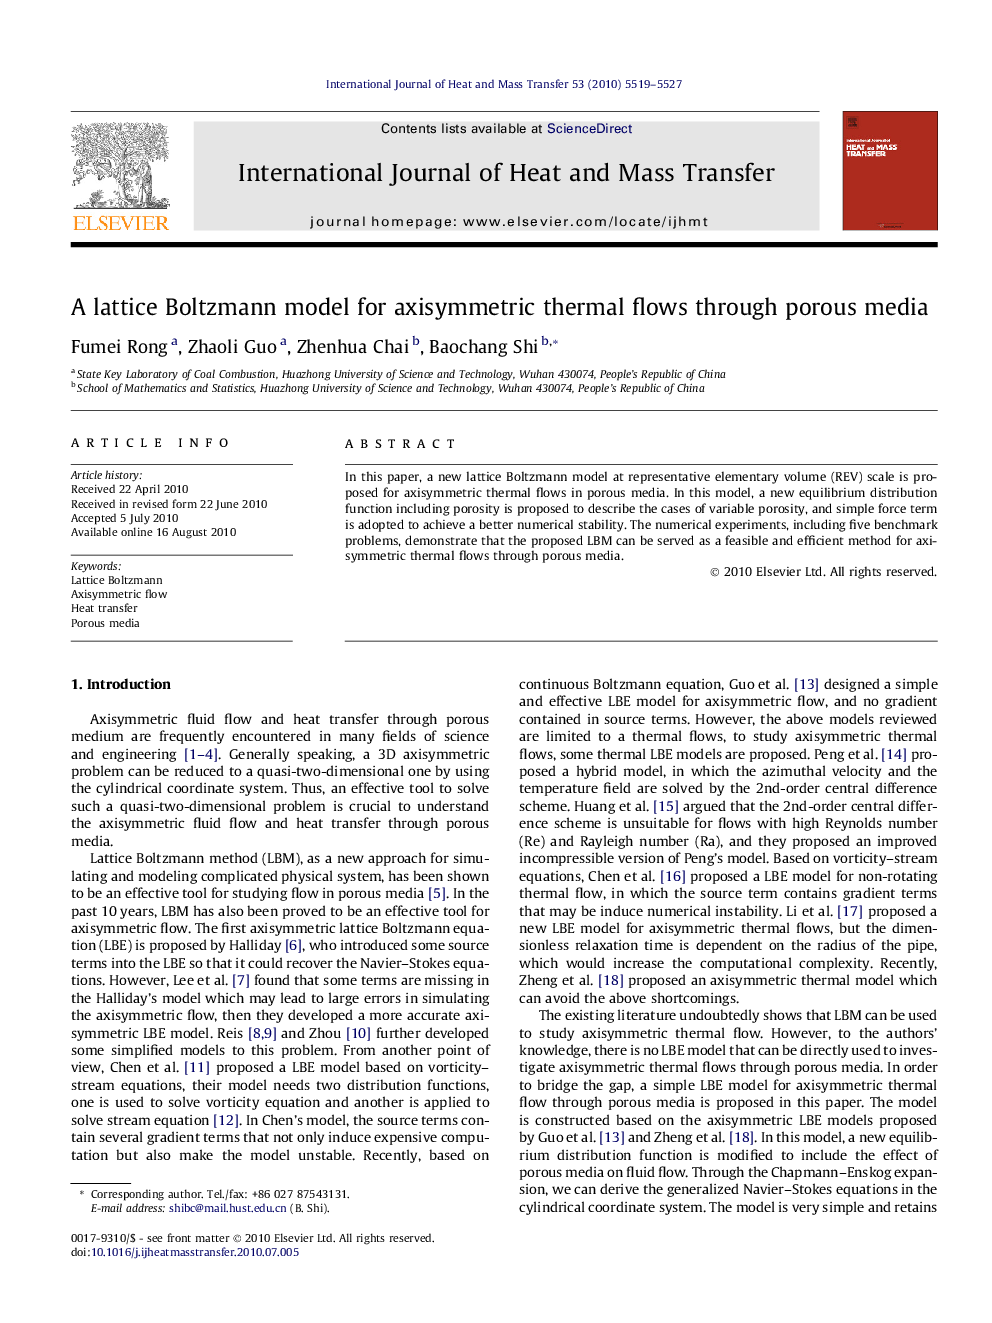 A lattice Boltzmann model for axisymmetric thermal flows through porous media